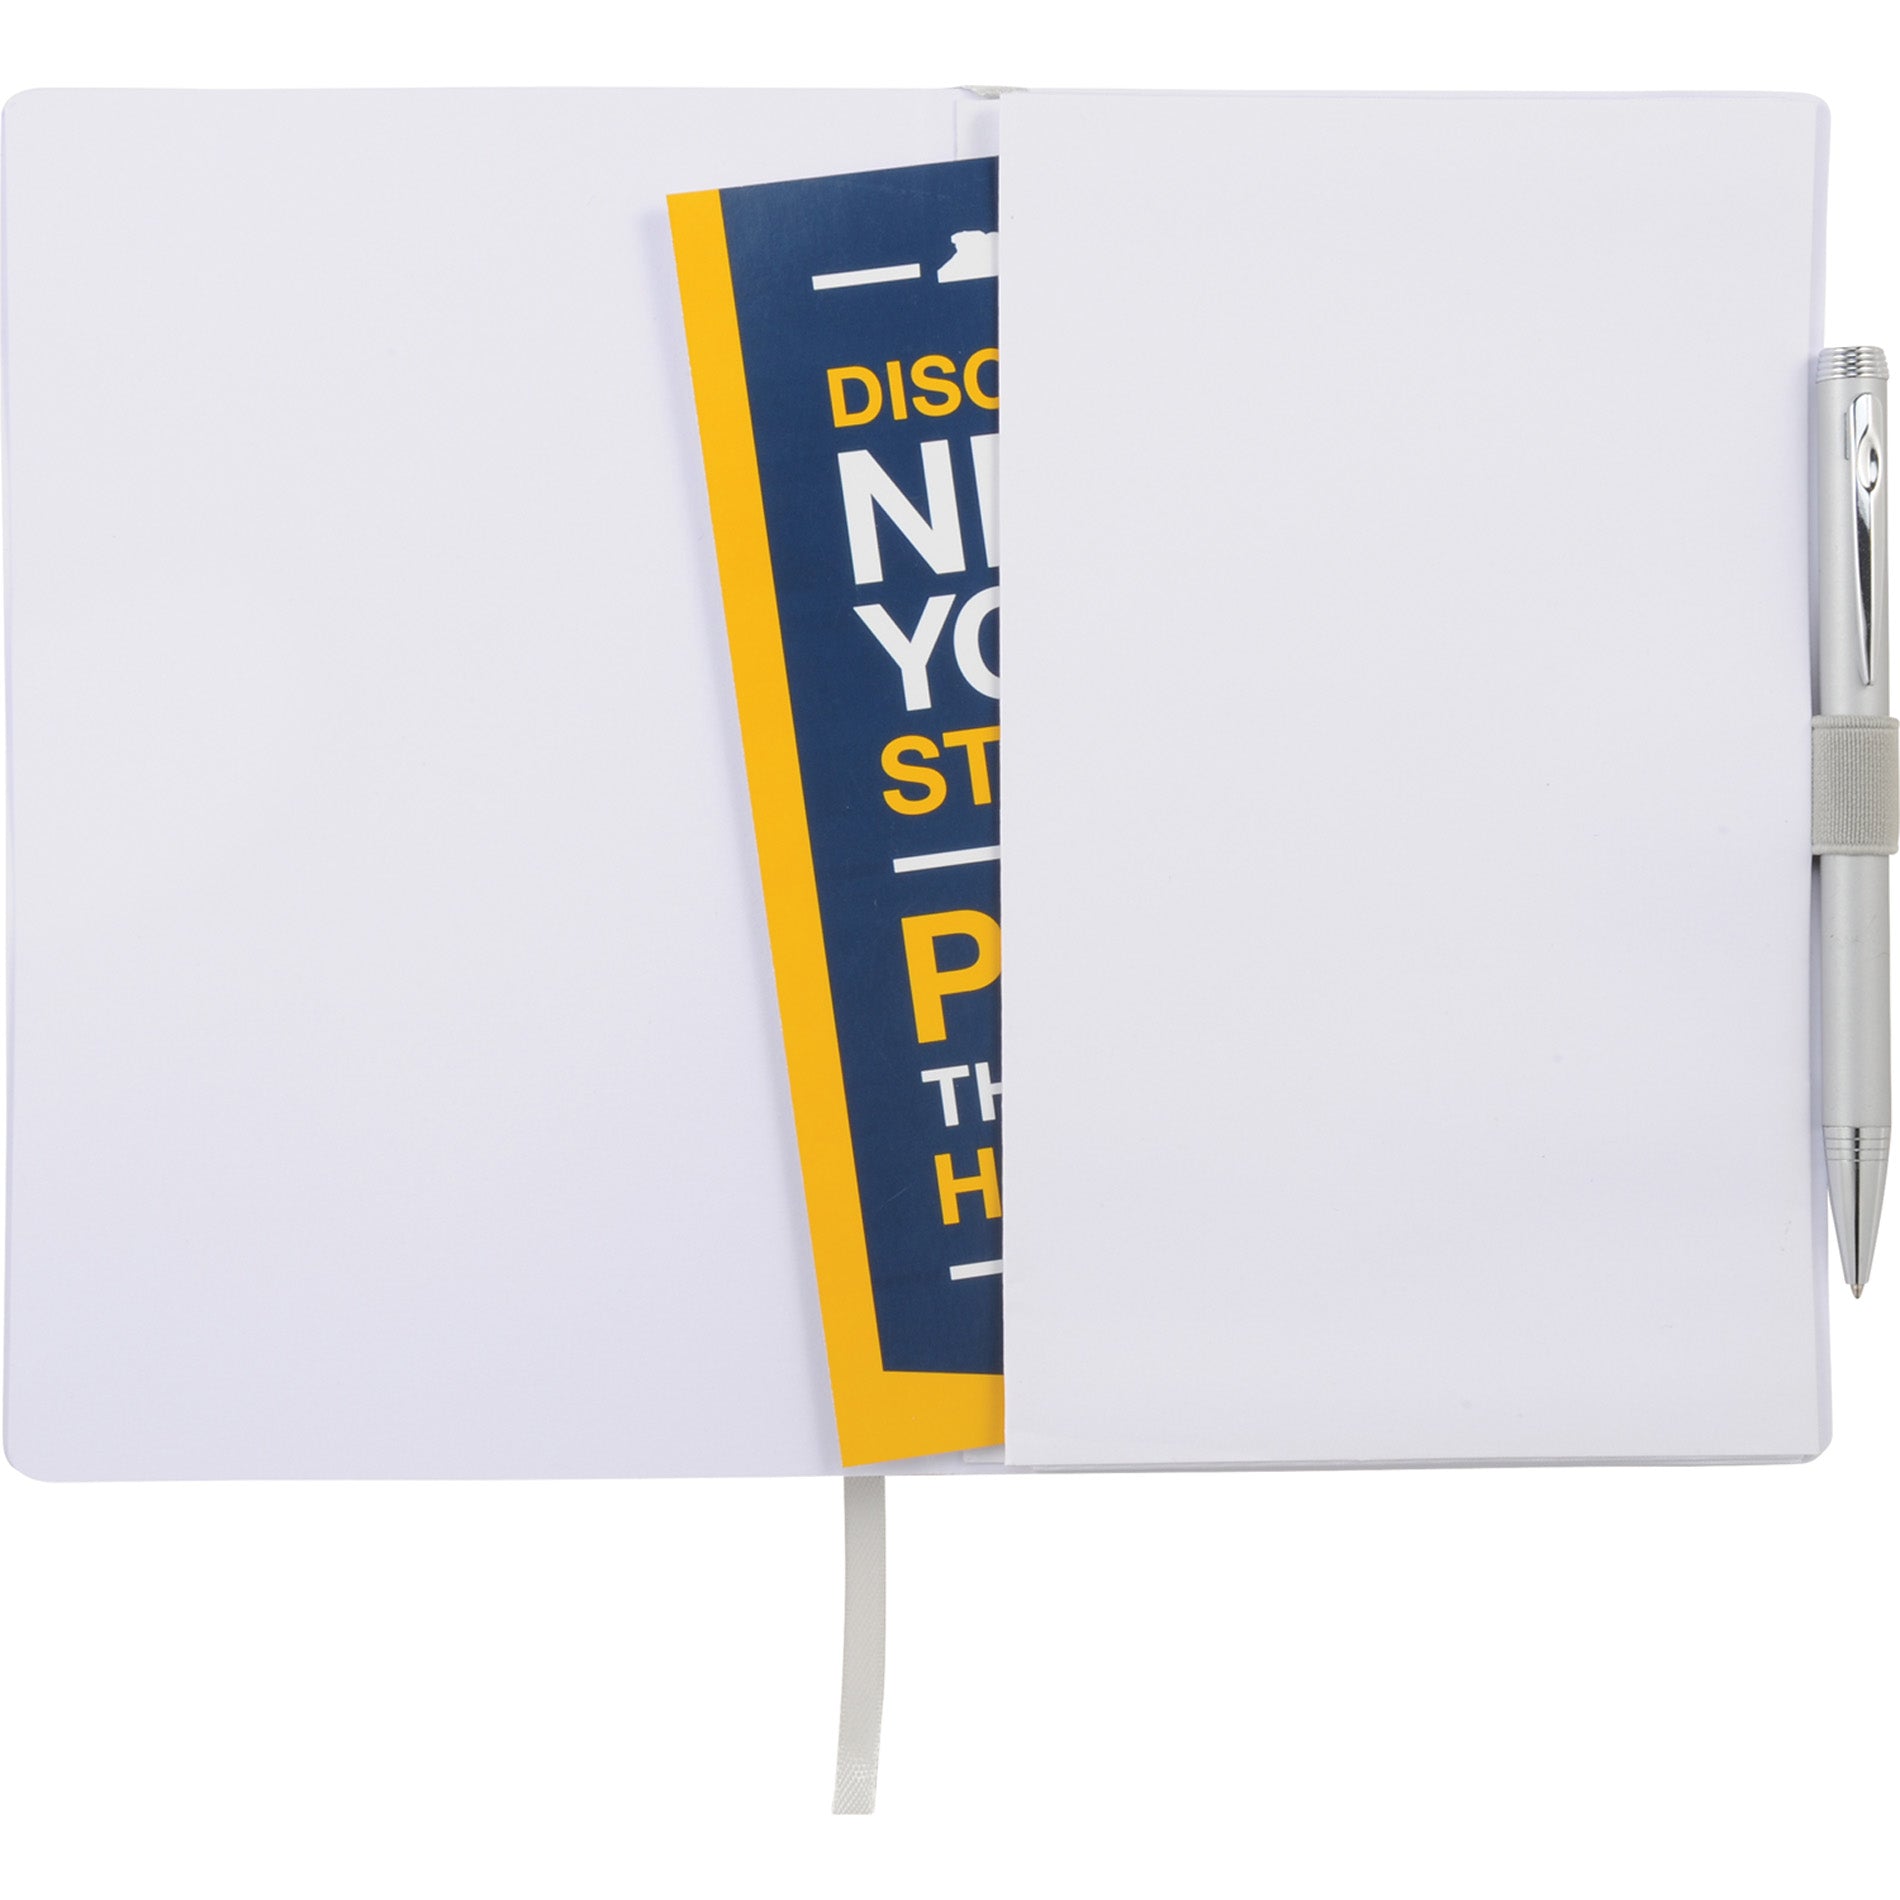 Nova Soft Bound JournalBook™